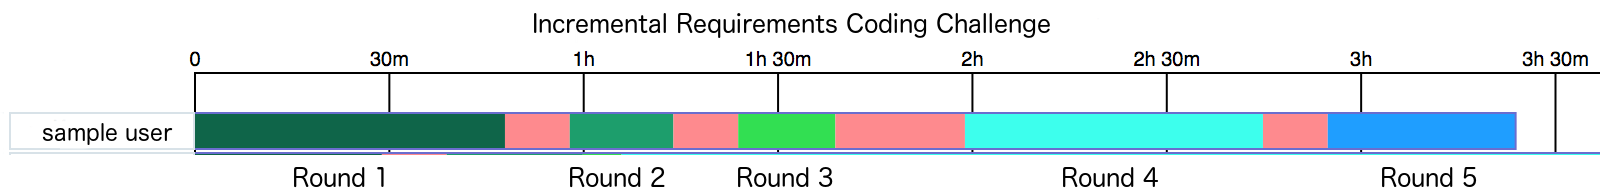 Incremental Requirements Coding Challenge